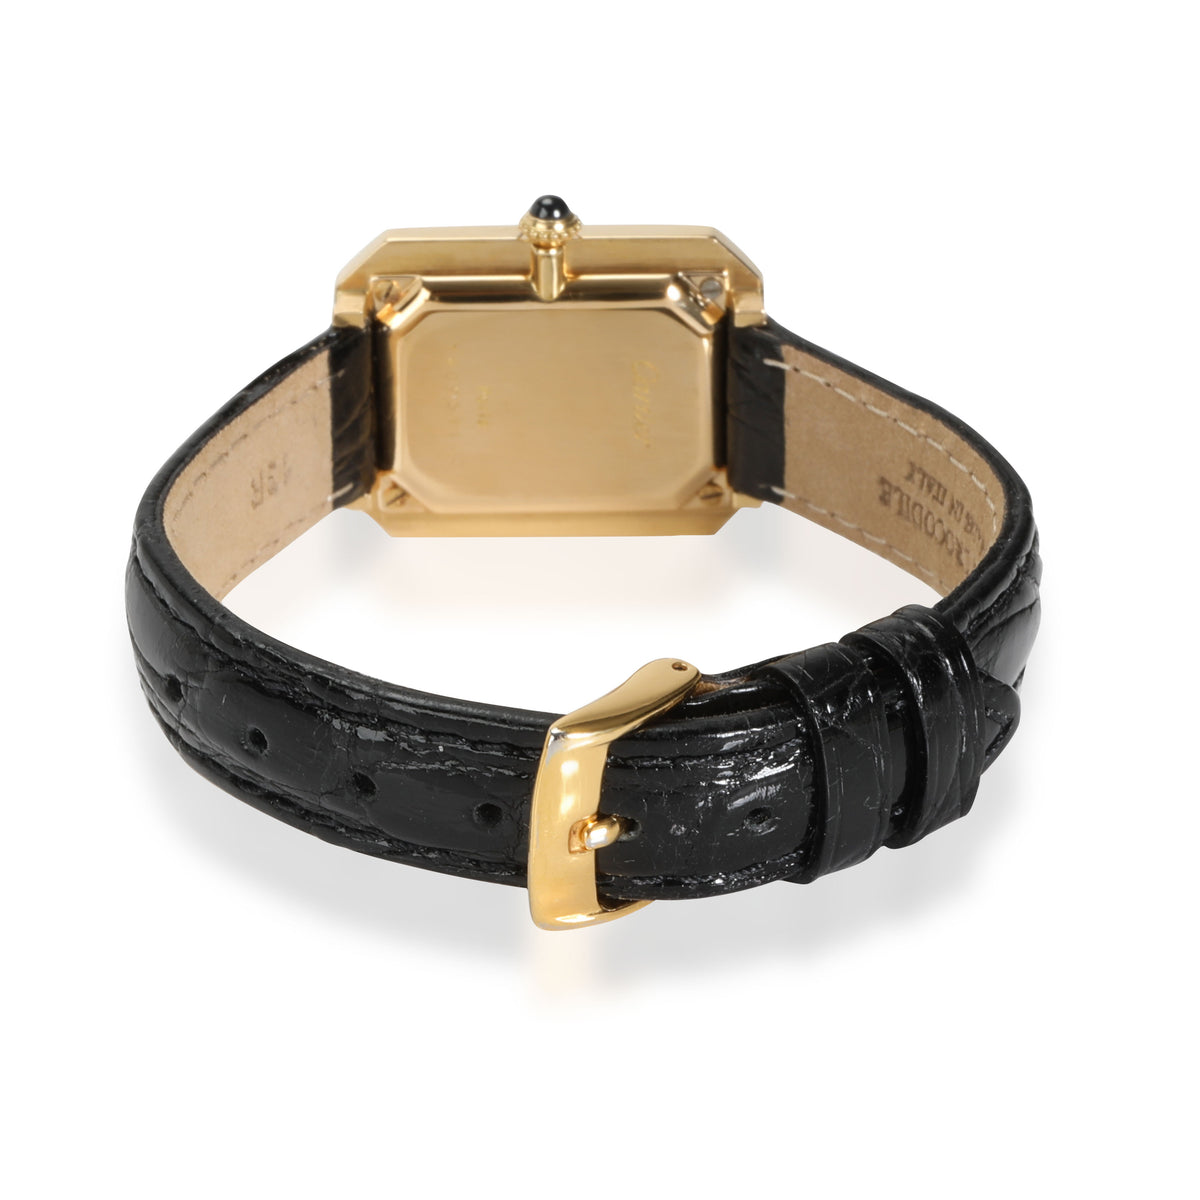 Cartier Crisallor 7809 Women's Watch in 18kt Yellow Gold